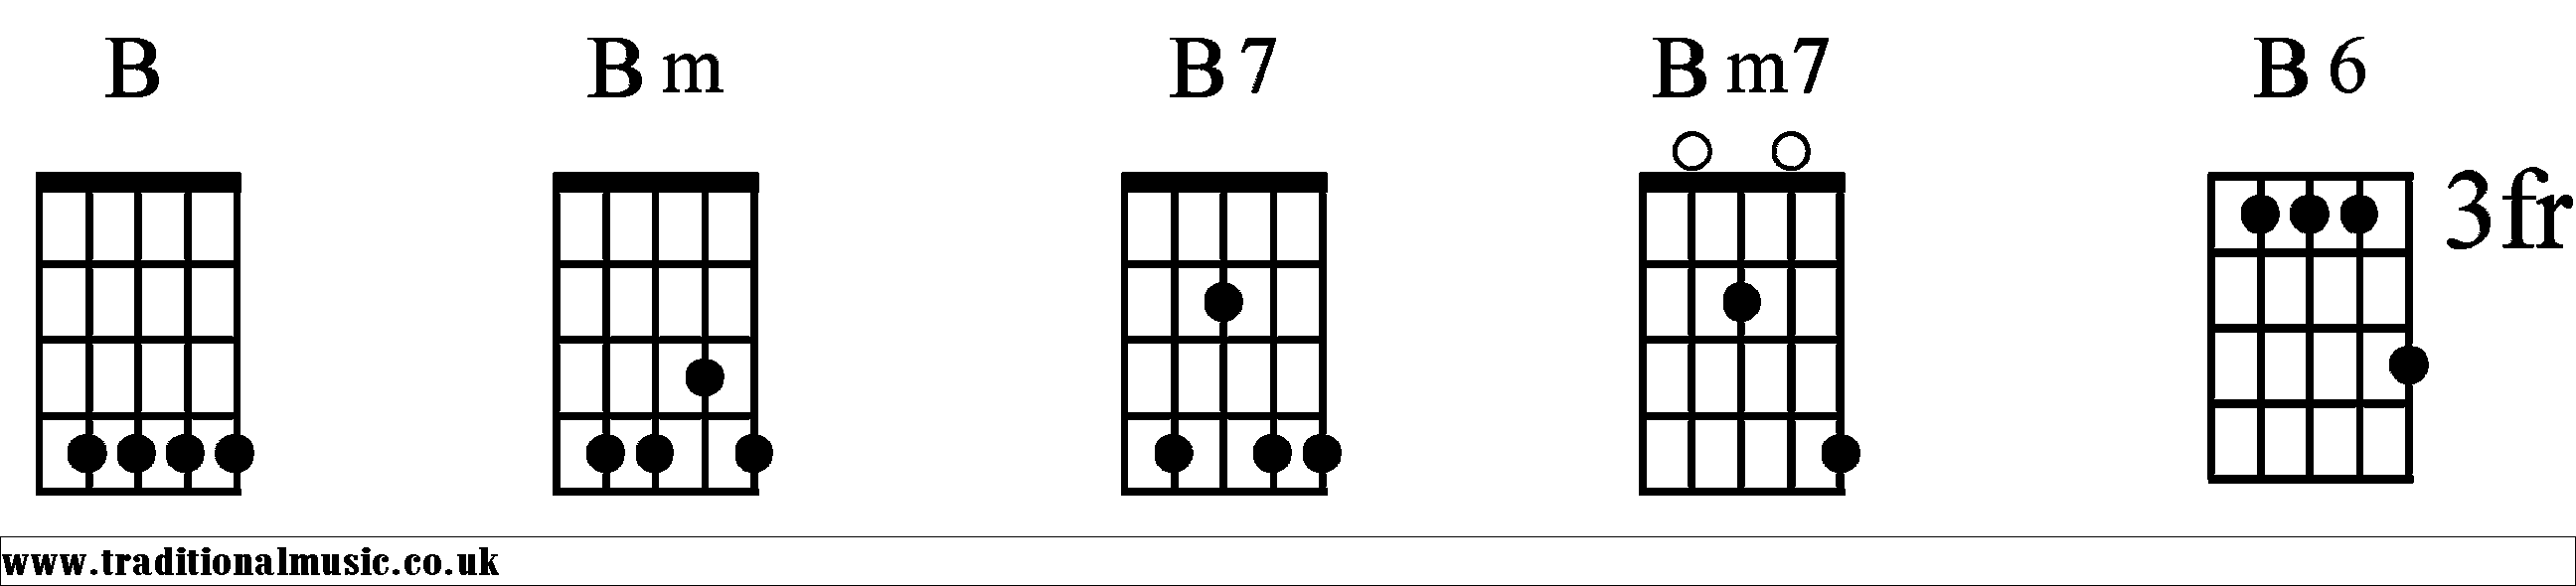 B Chords diagrams Banjo 1